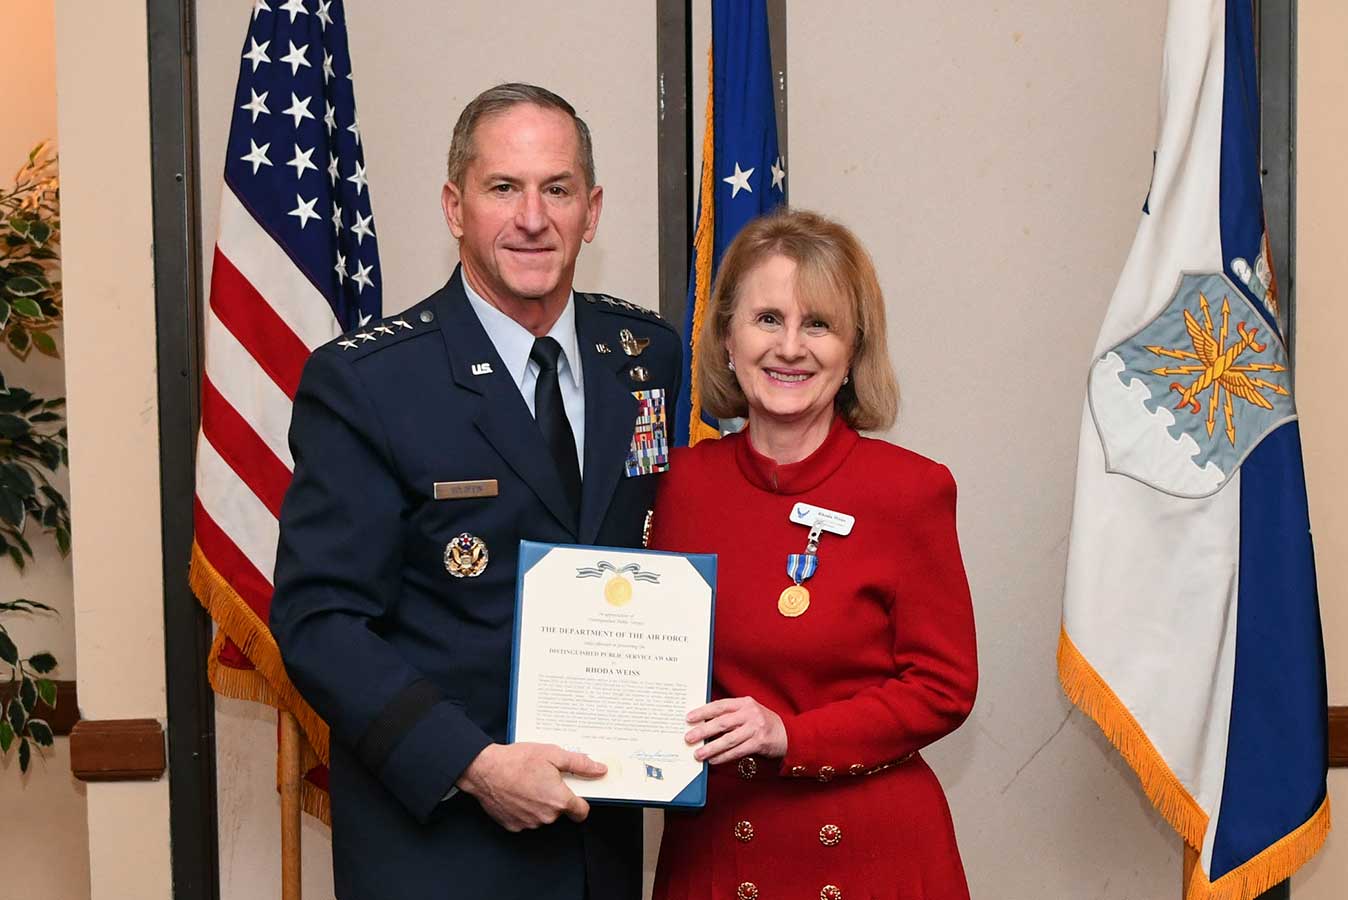 U.S. Air Force Chief of Staff Gen. David L. Goldfein presents the Distinguished Public Service Award to Dr. Rhoda Weiss